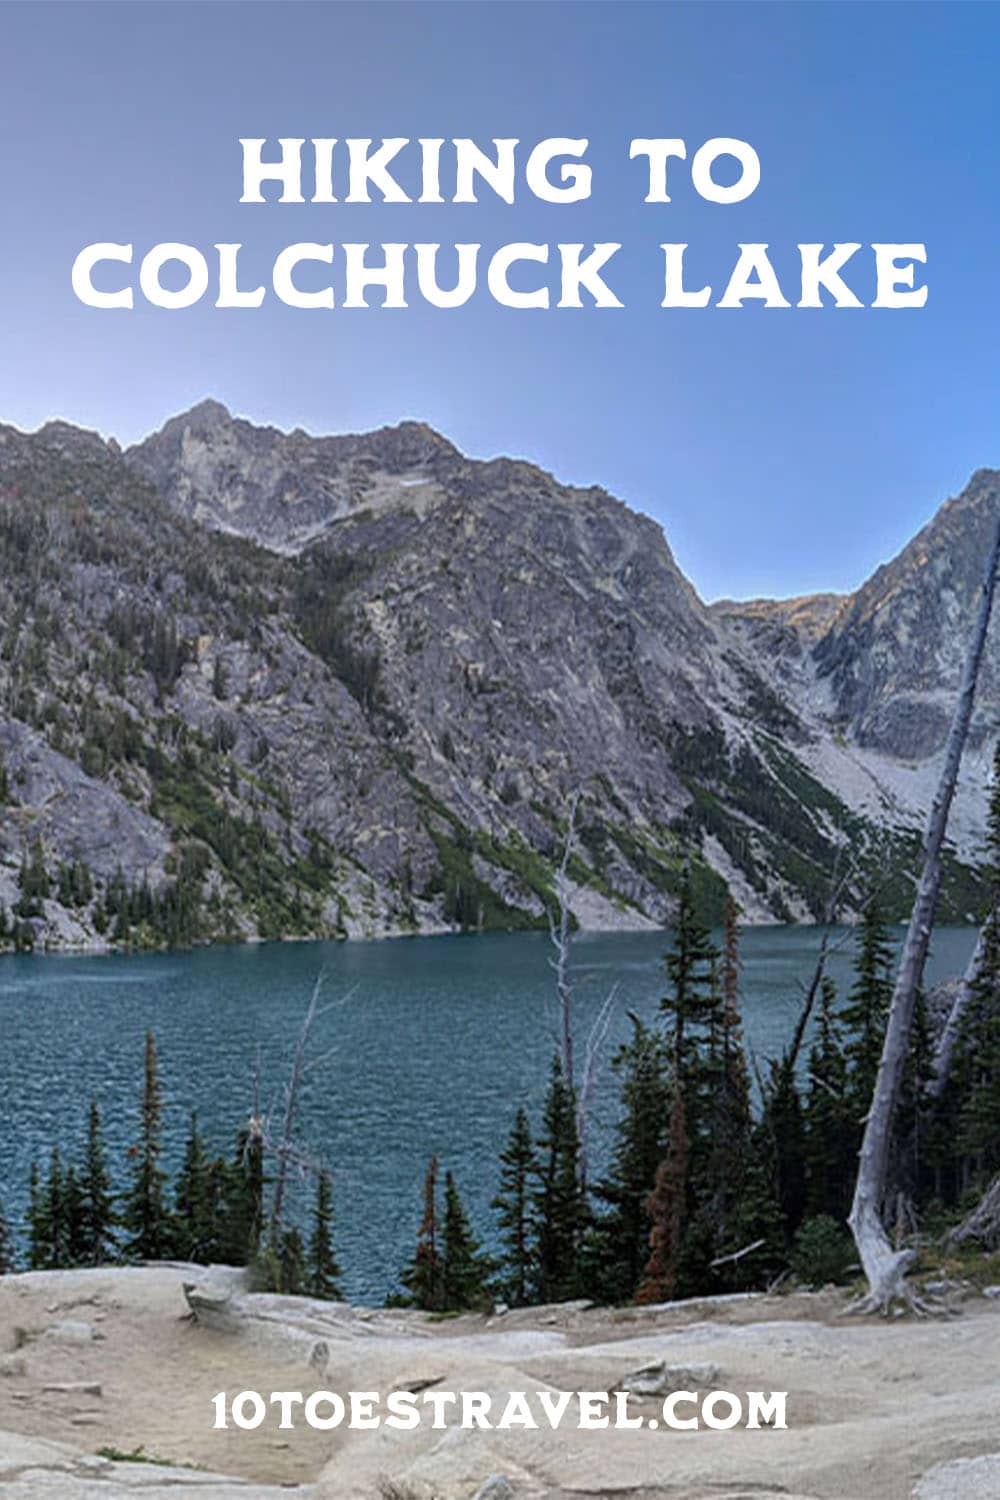 Info on hiking to colchuck lake